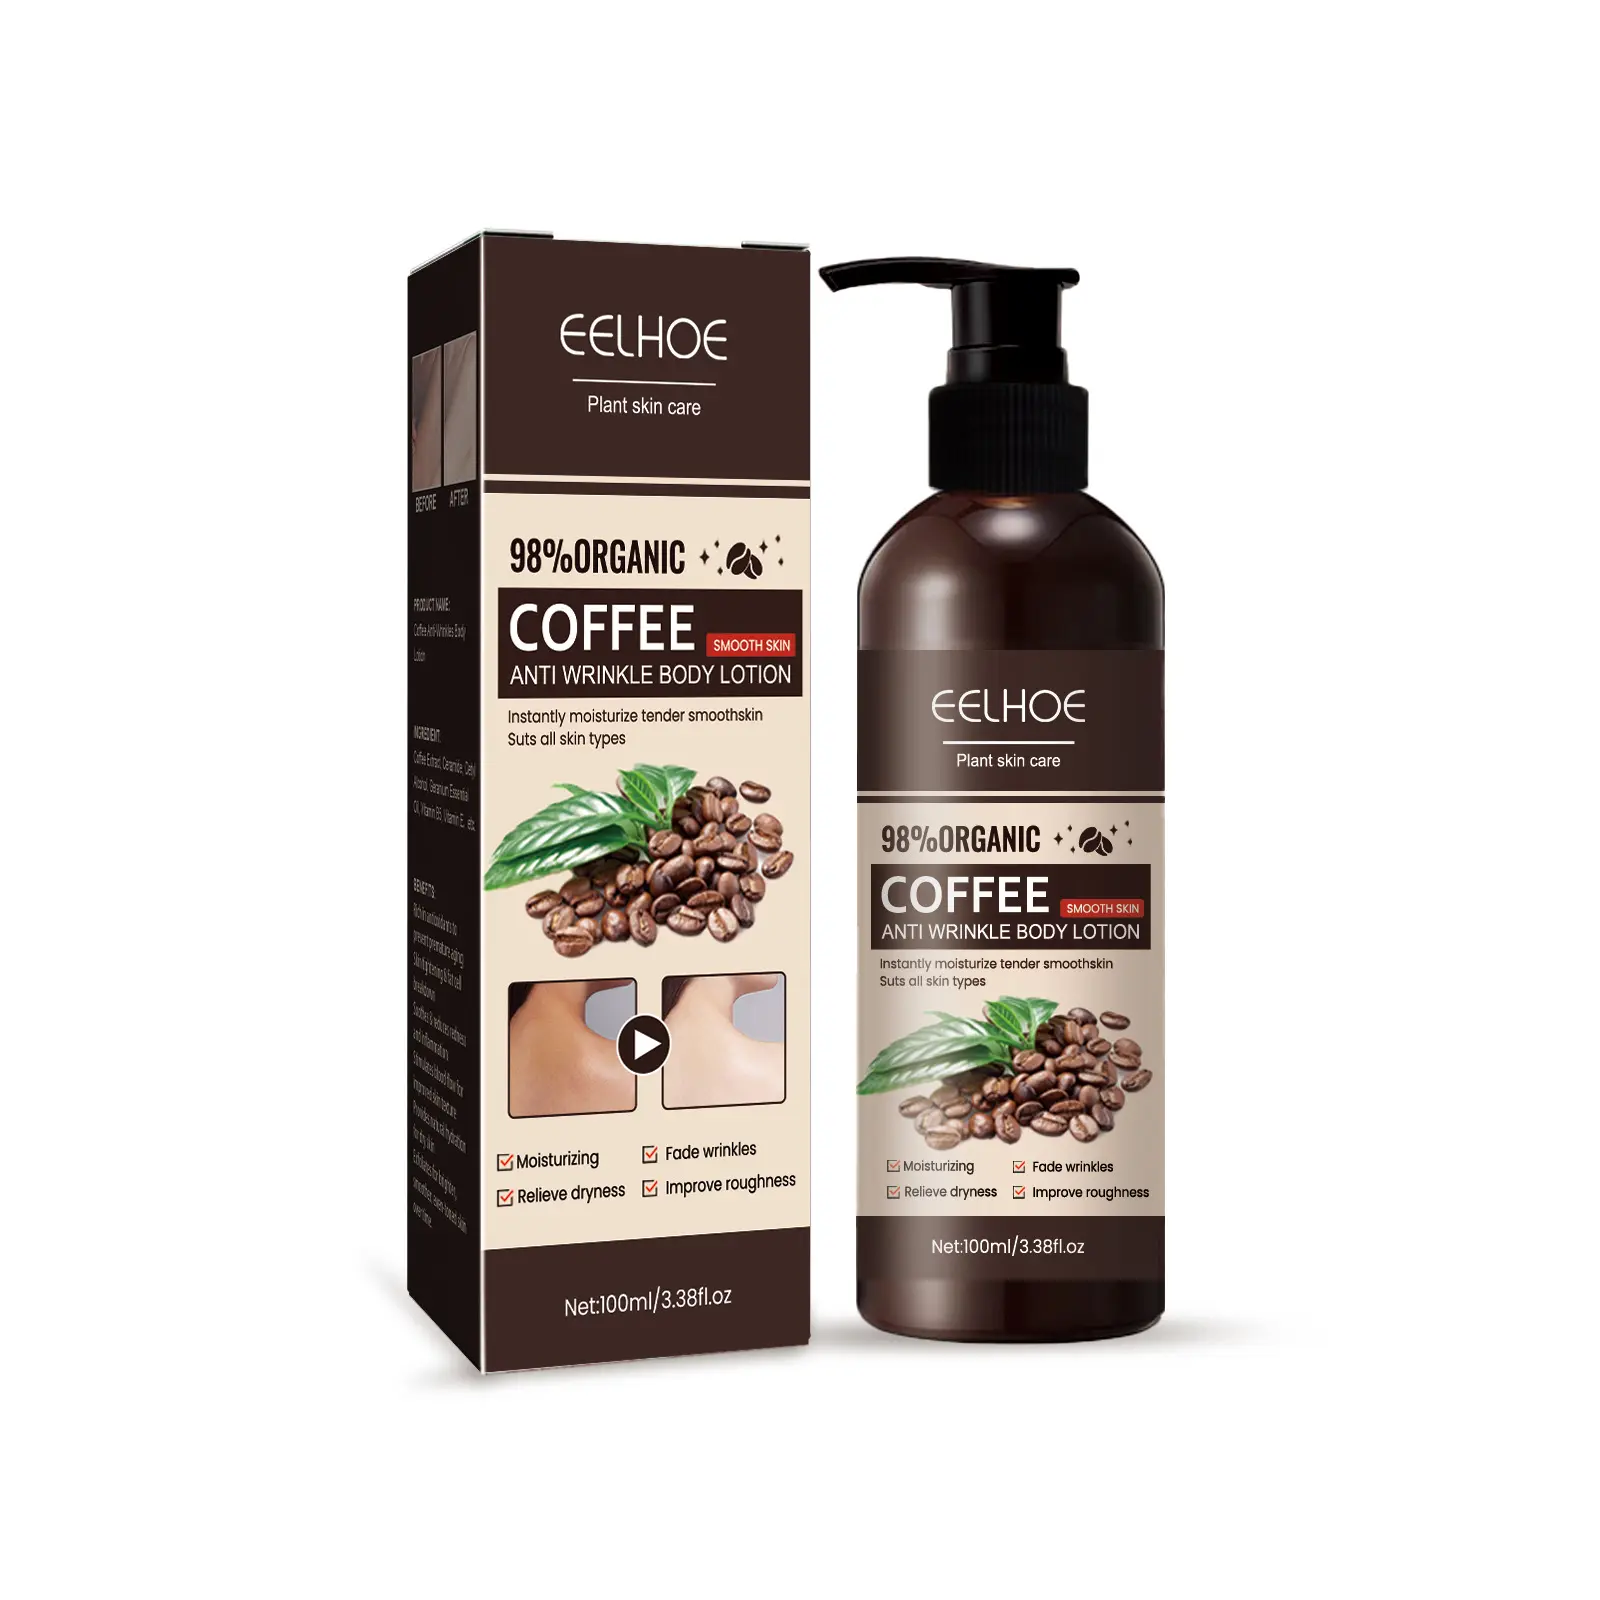 EELHOE Kaffee Anti-Falten-Duft Körperlotion erfrischend und zart aufhellende Haut reparatur trockene Haut Haut-Body-Lotion